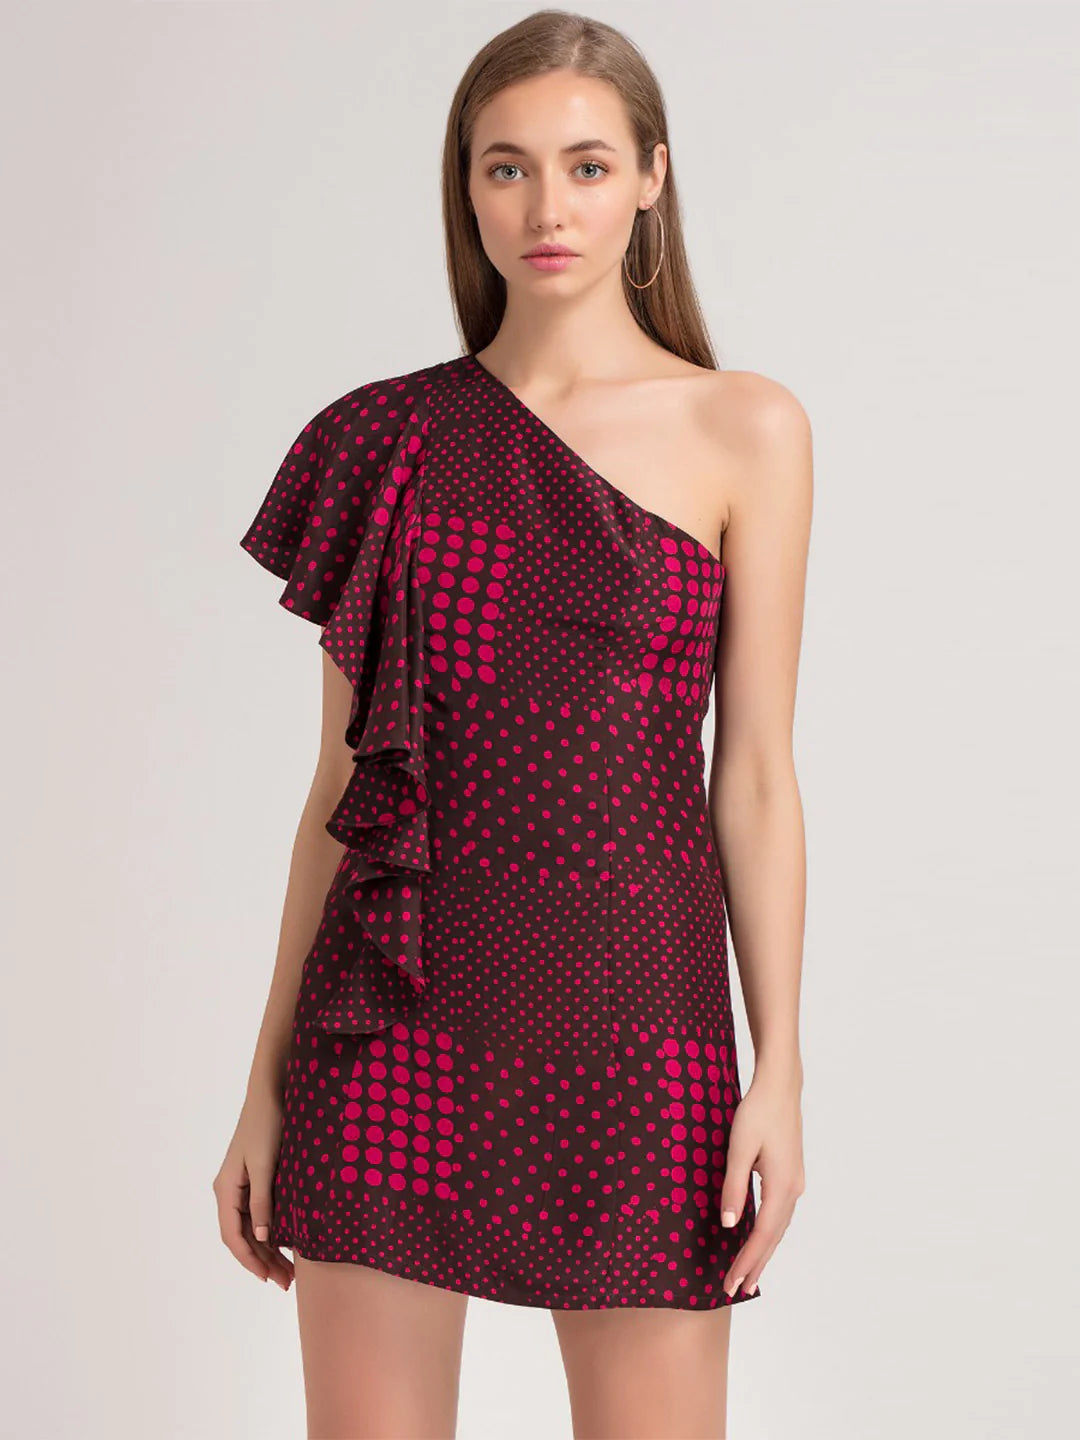 One-Shoulder Dress for Women | Dazzling Fuchsia Polka One-Shoulder Dress